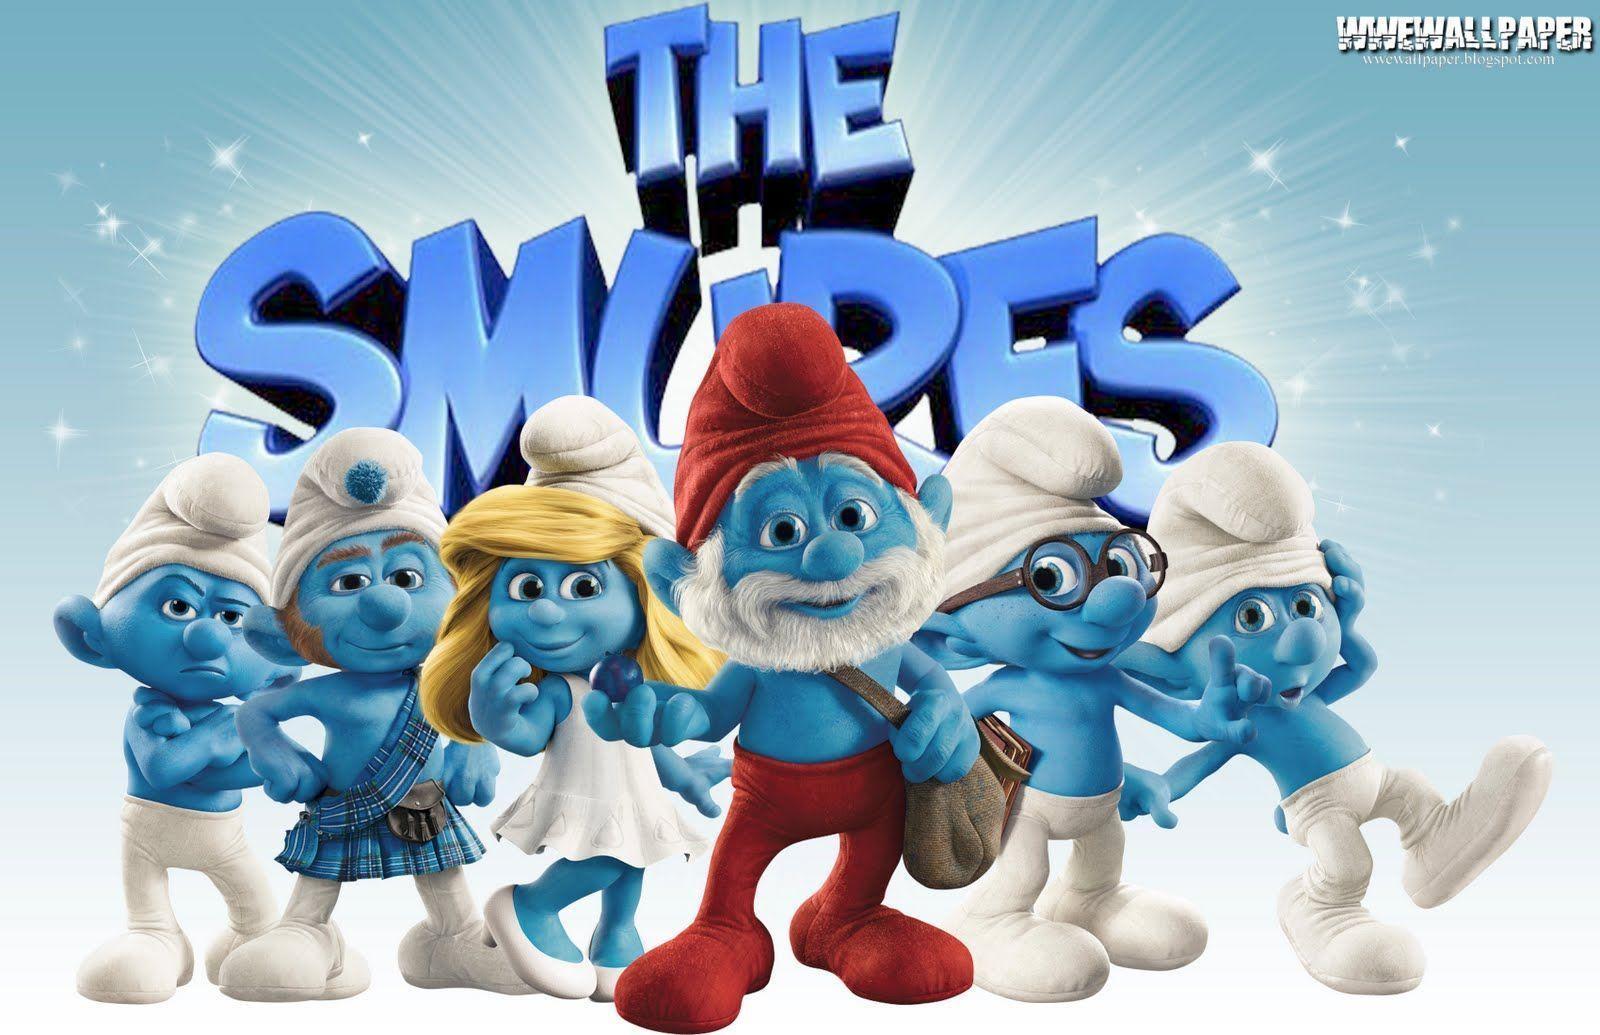 Smurfs Wallpaper. Kids TV Picture